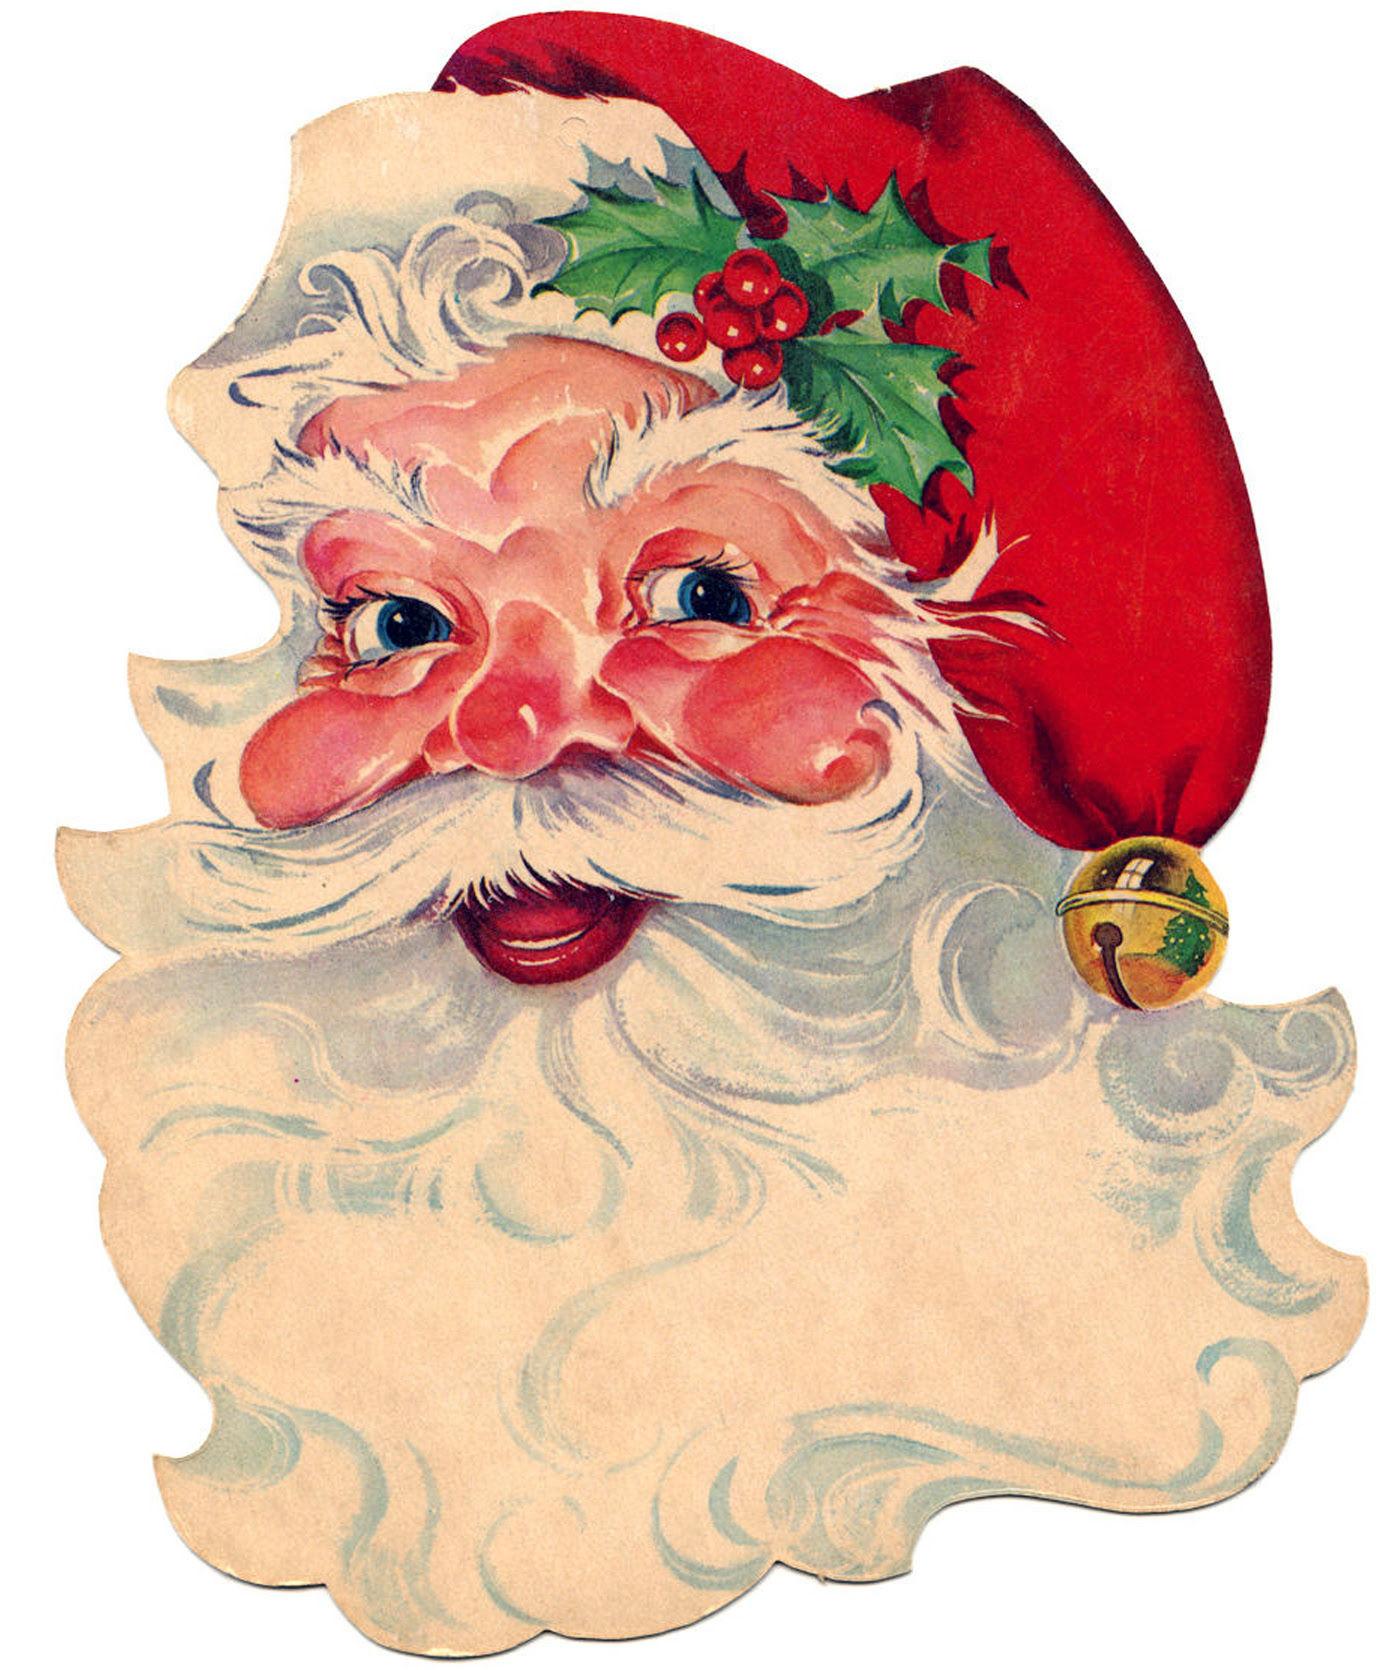 9 Free Vintage Clip Art - Santa, Santa, Santa! - The Graphics Fairy